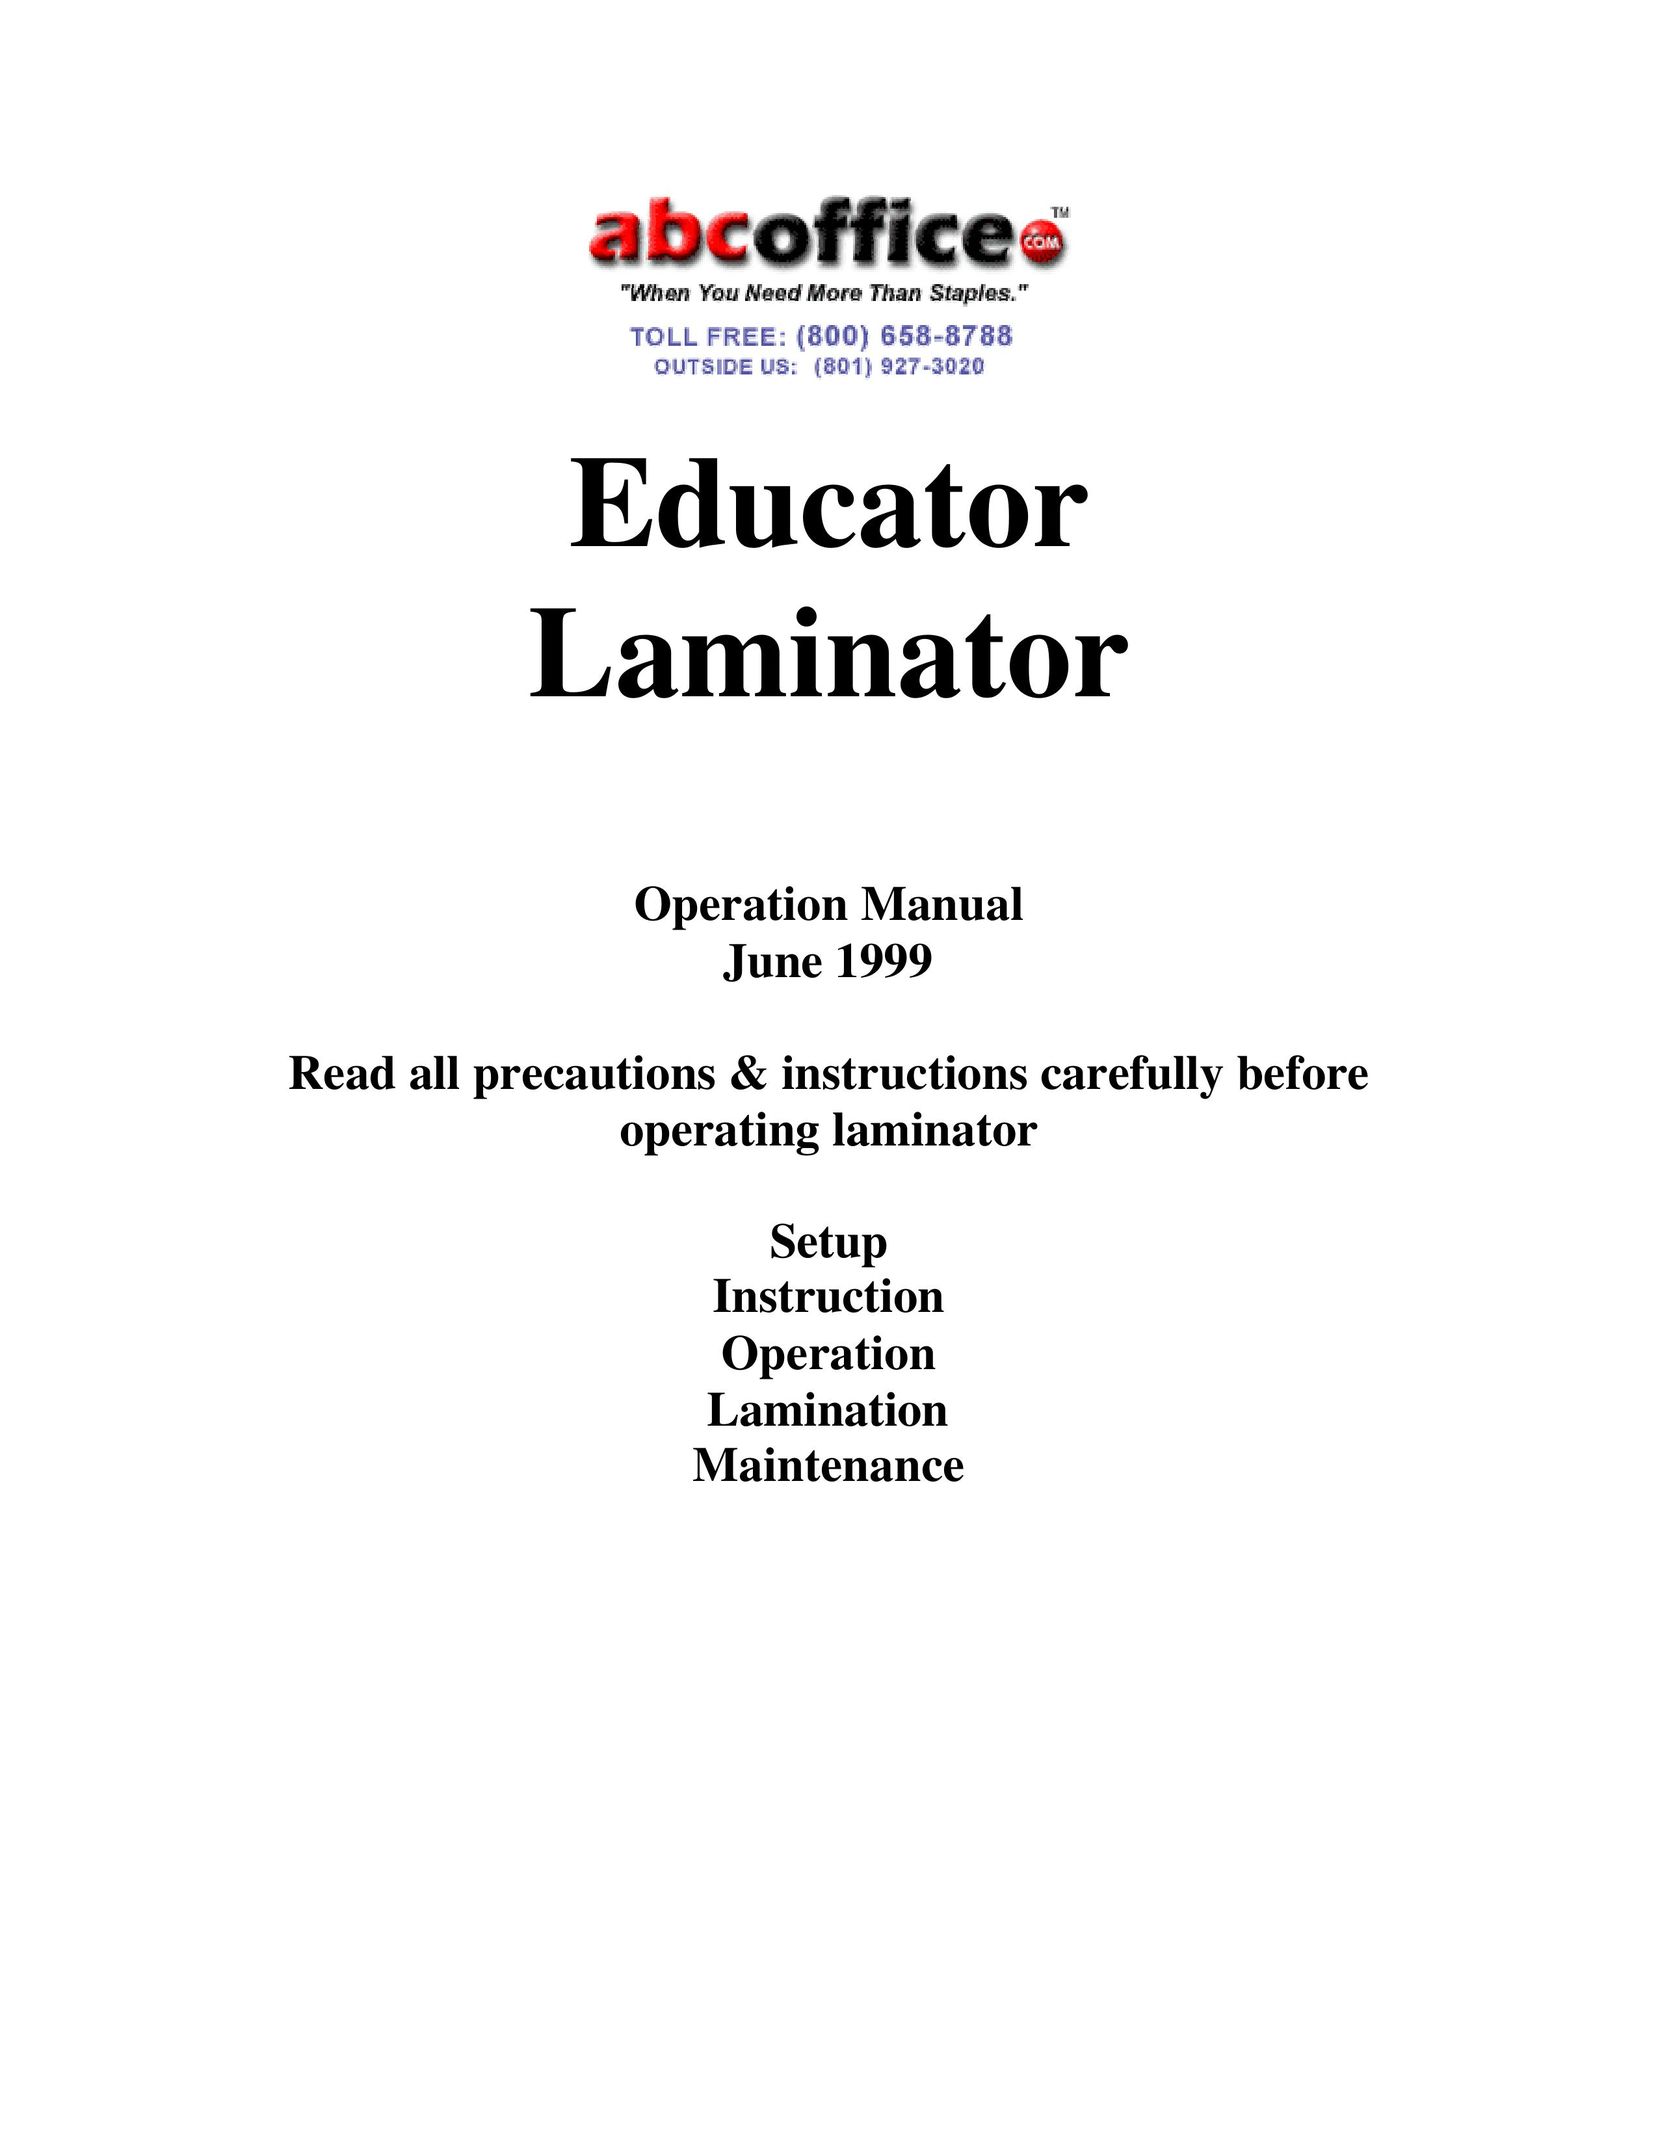 ABC Office Educator Laminator User Manual